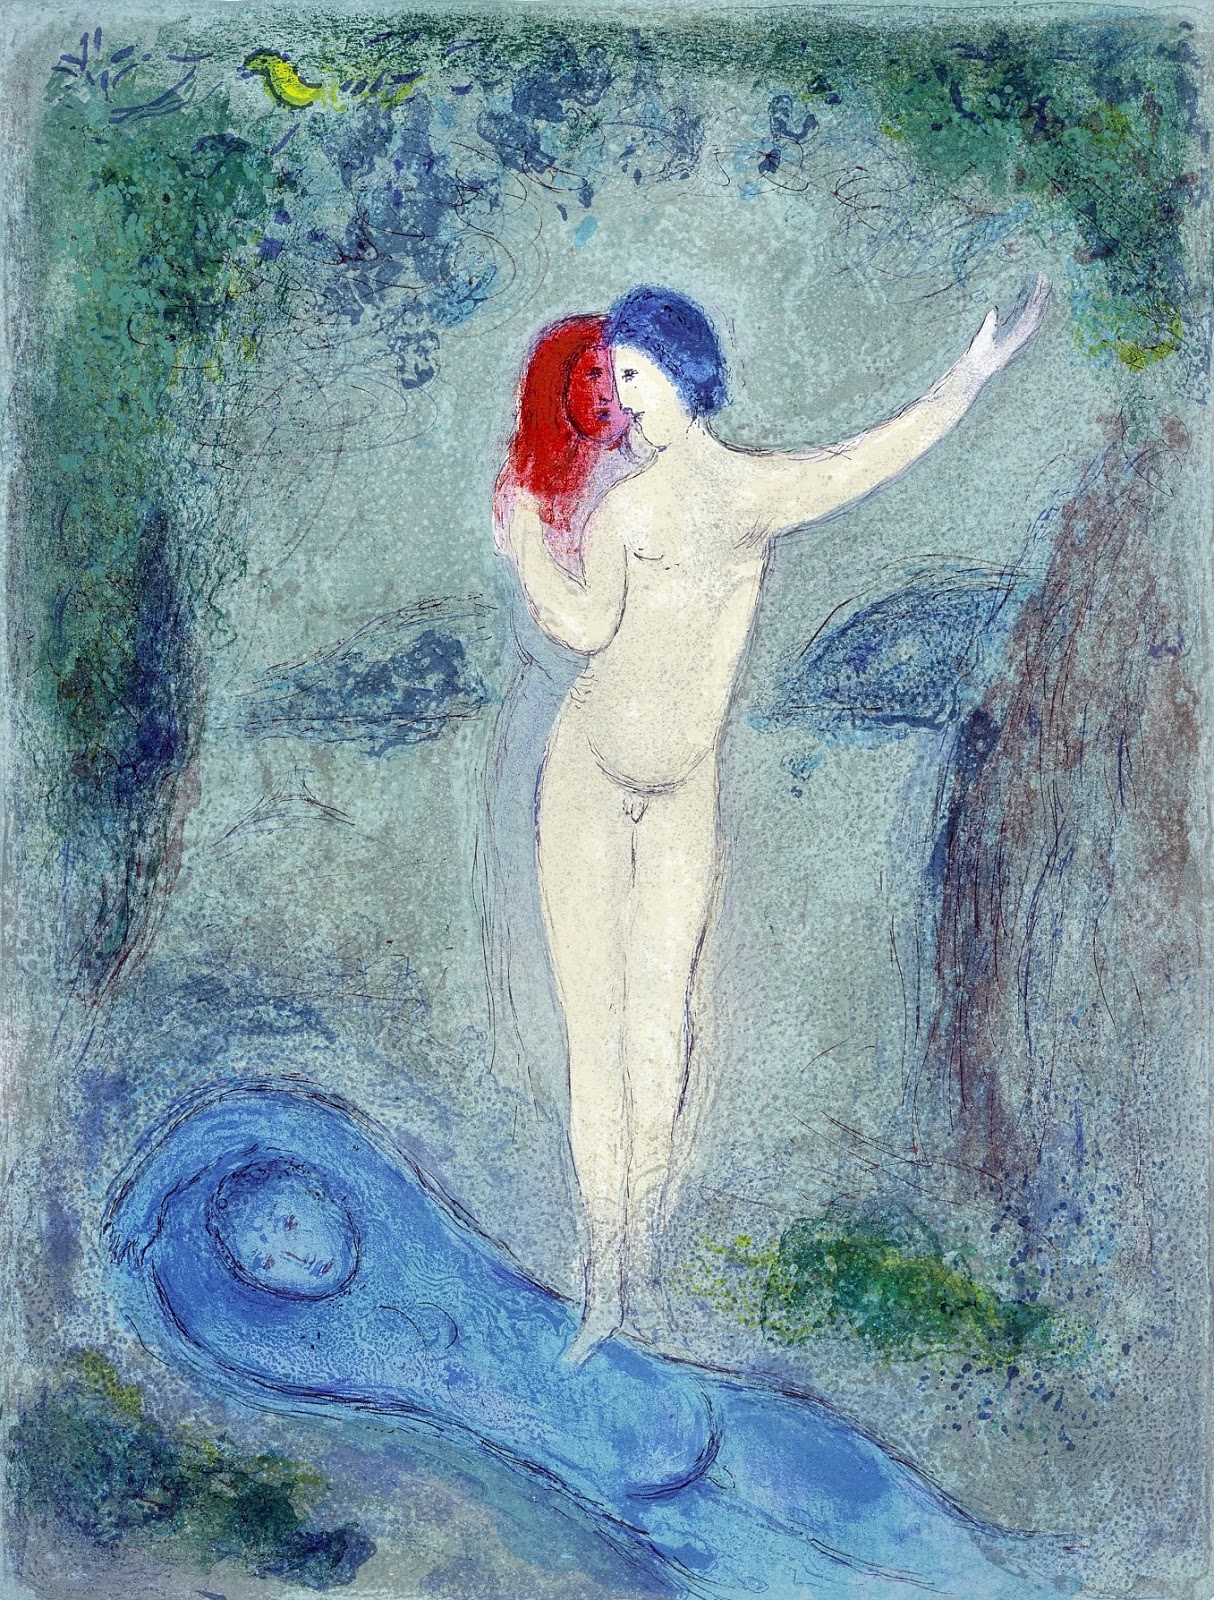 Marc+Chagall-1887-1985 (252).jpg